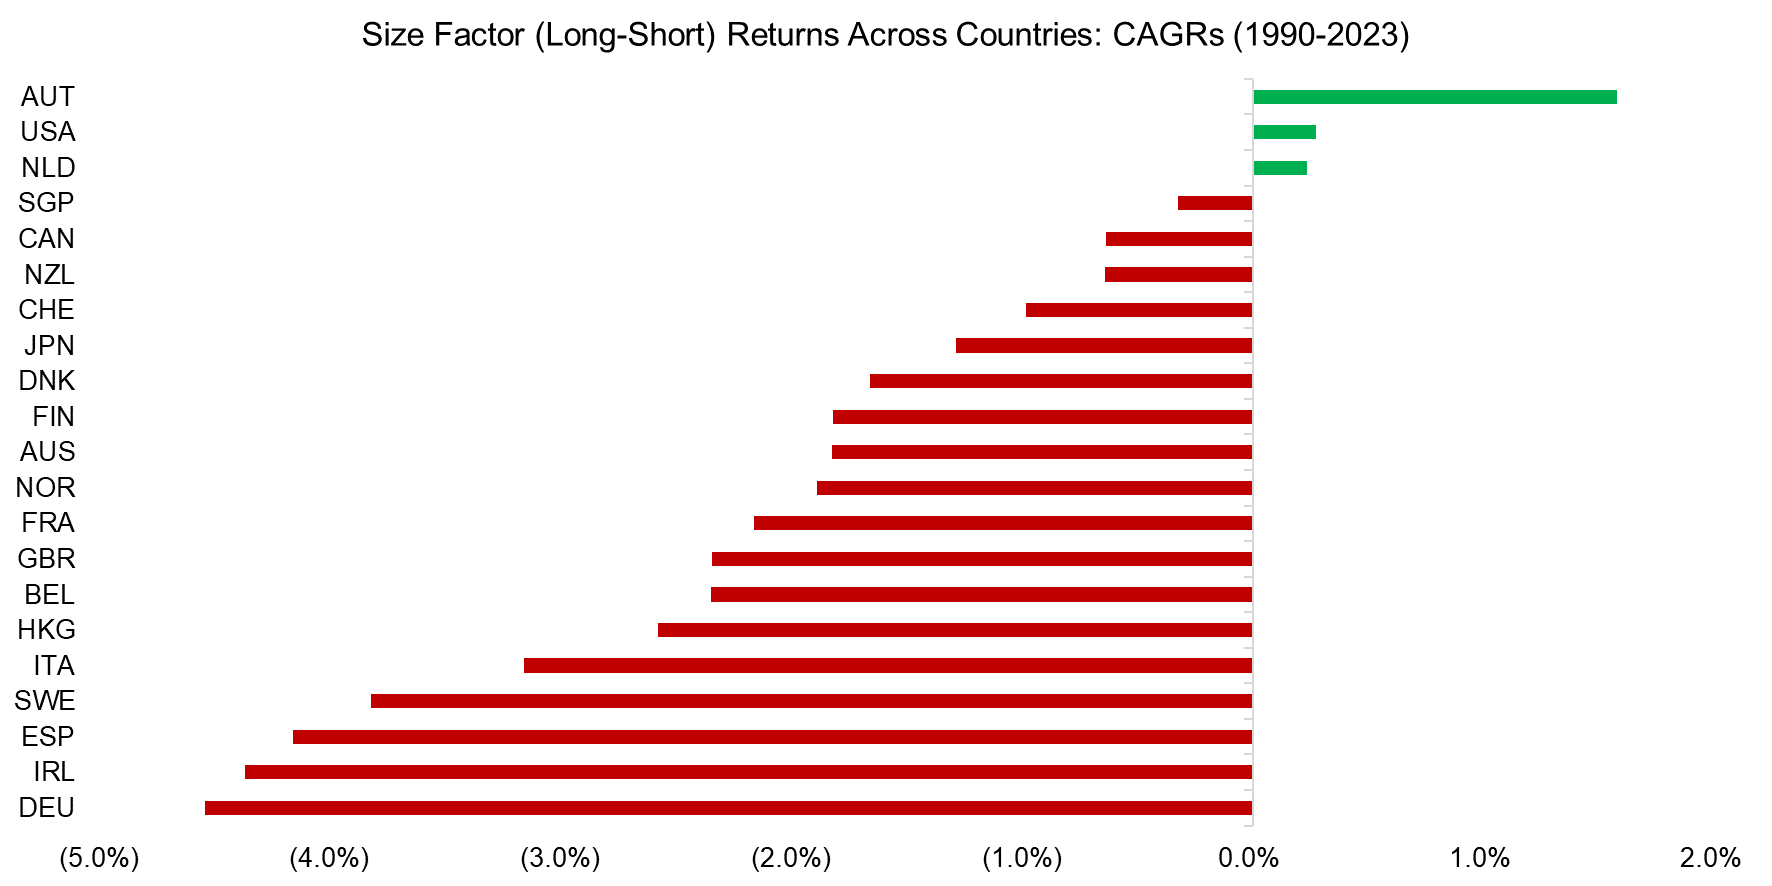 Size Factor (Long-Short) Returns Across Countries CAGRs (1990-2023)